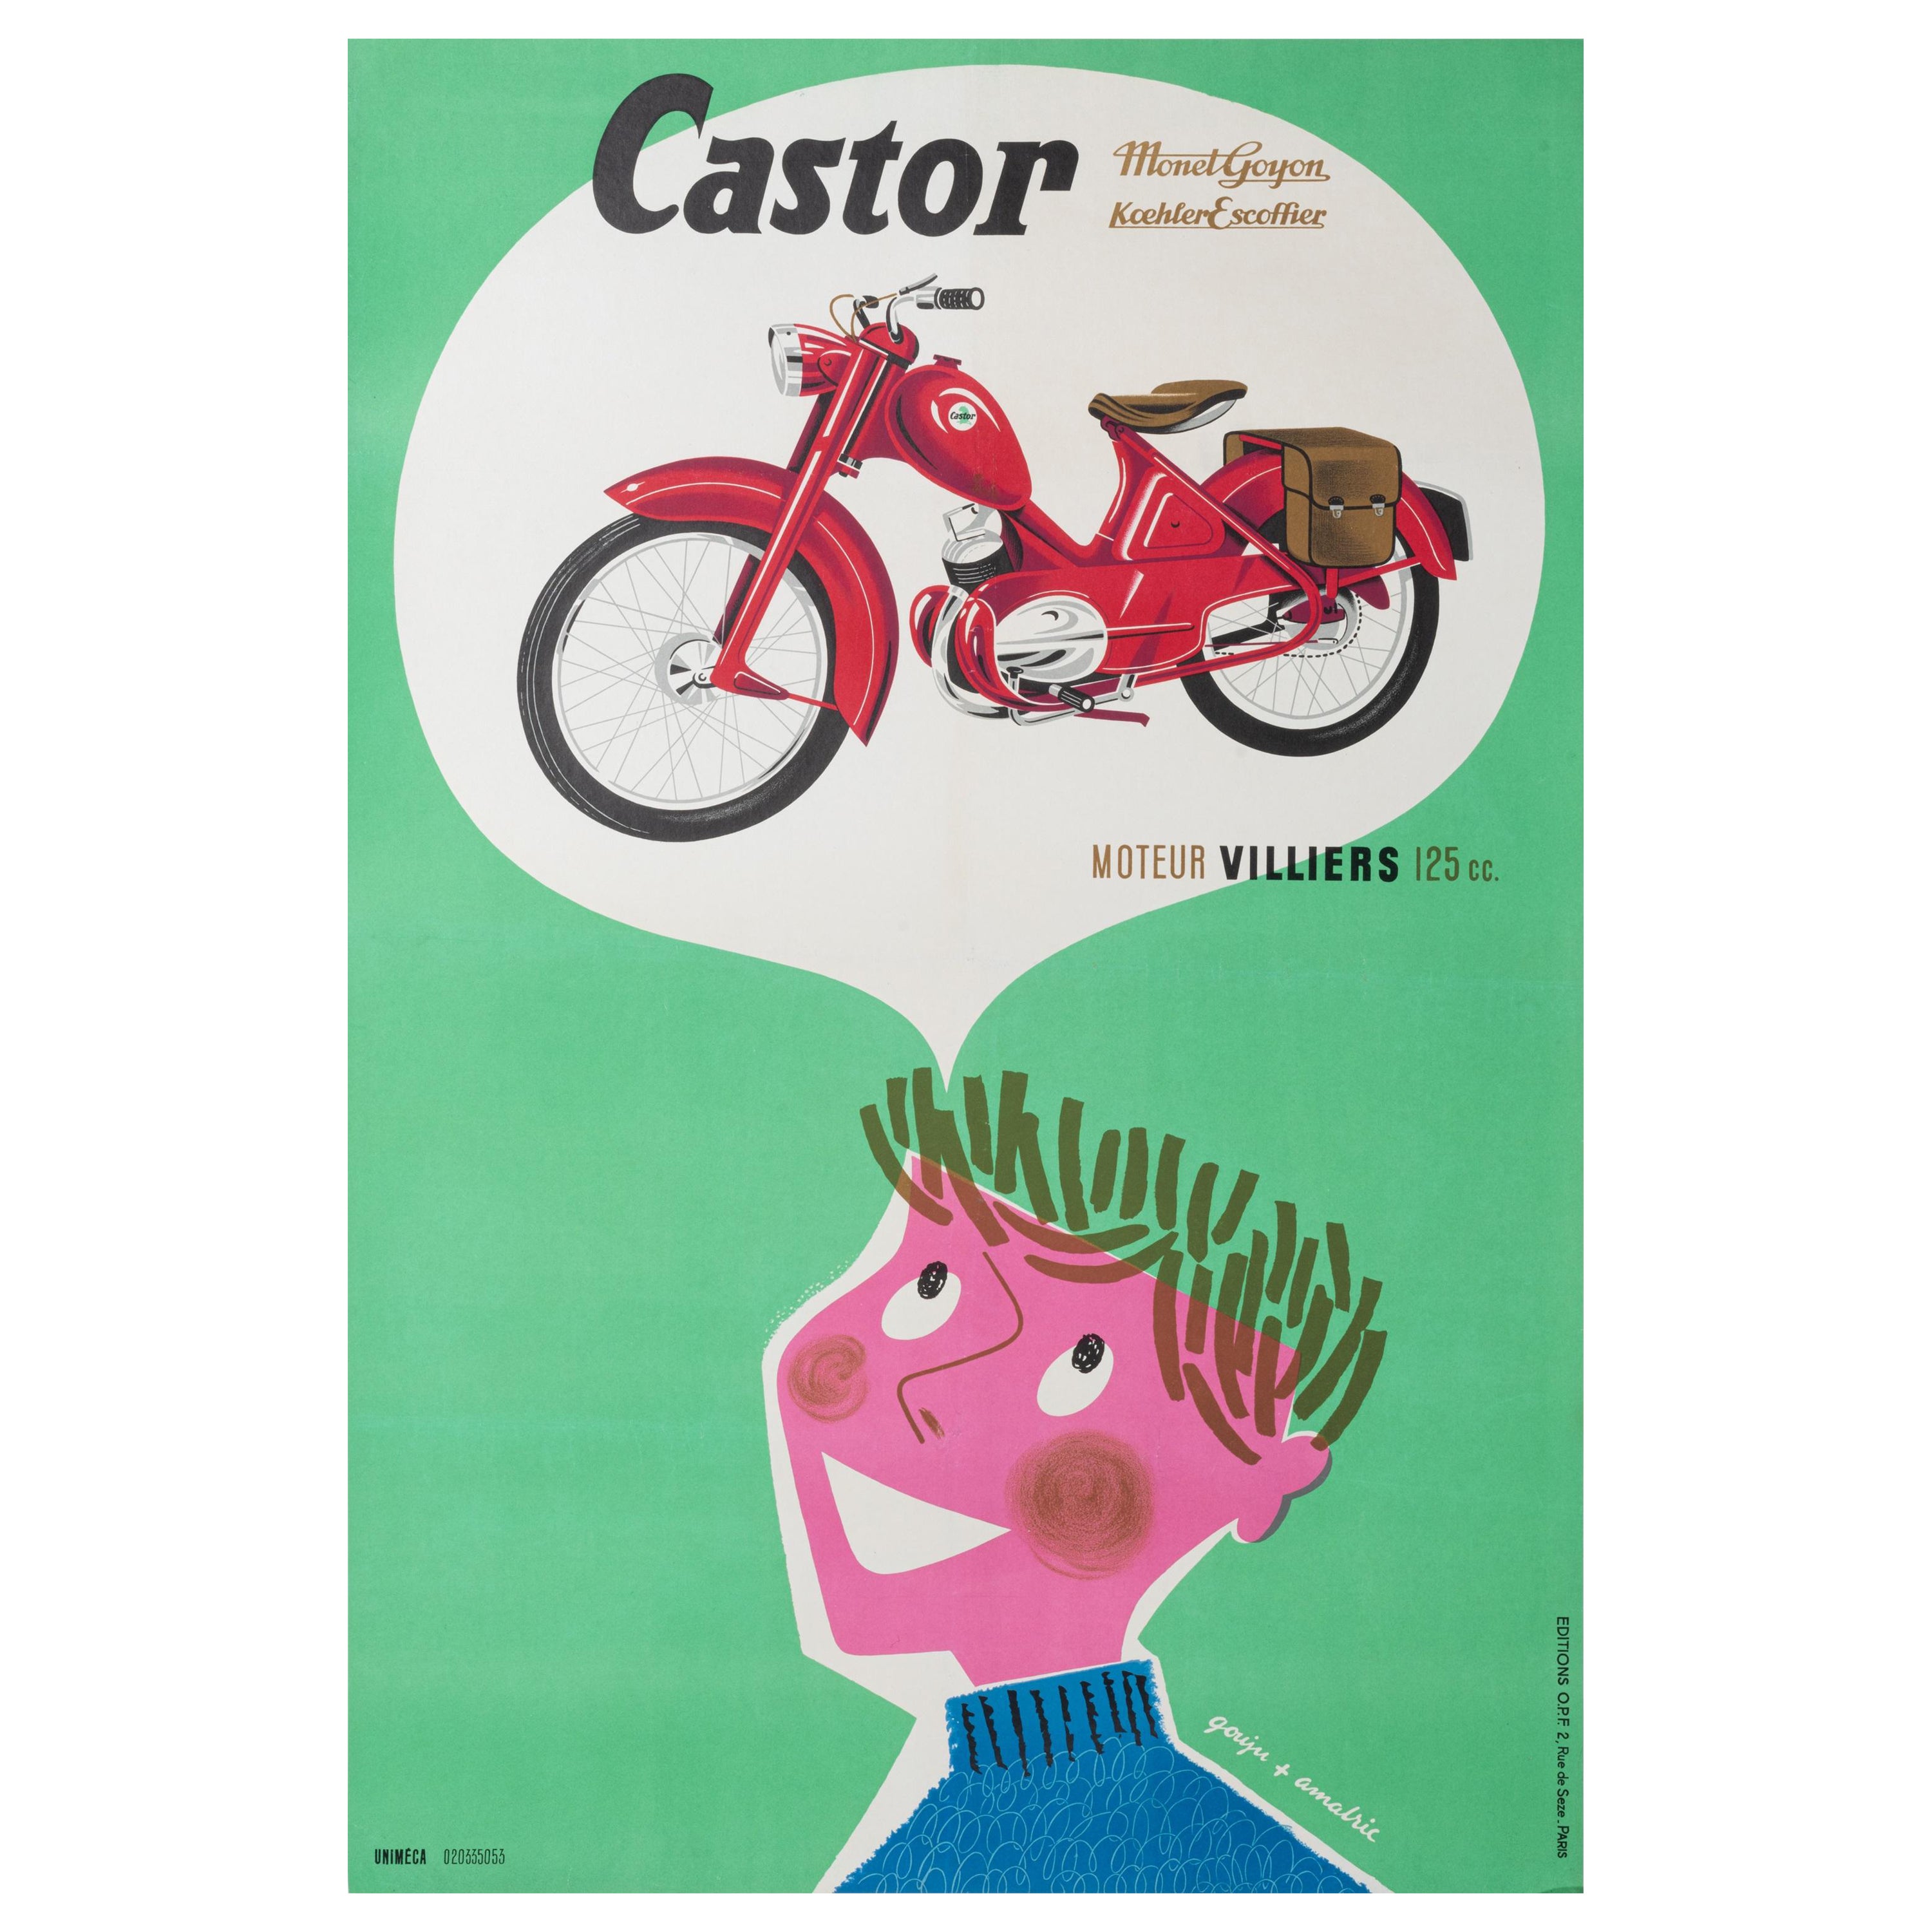 Gouju Amalric, Original Motocycle Poster, Castor, Monet Goyon Koehler, 1956